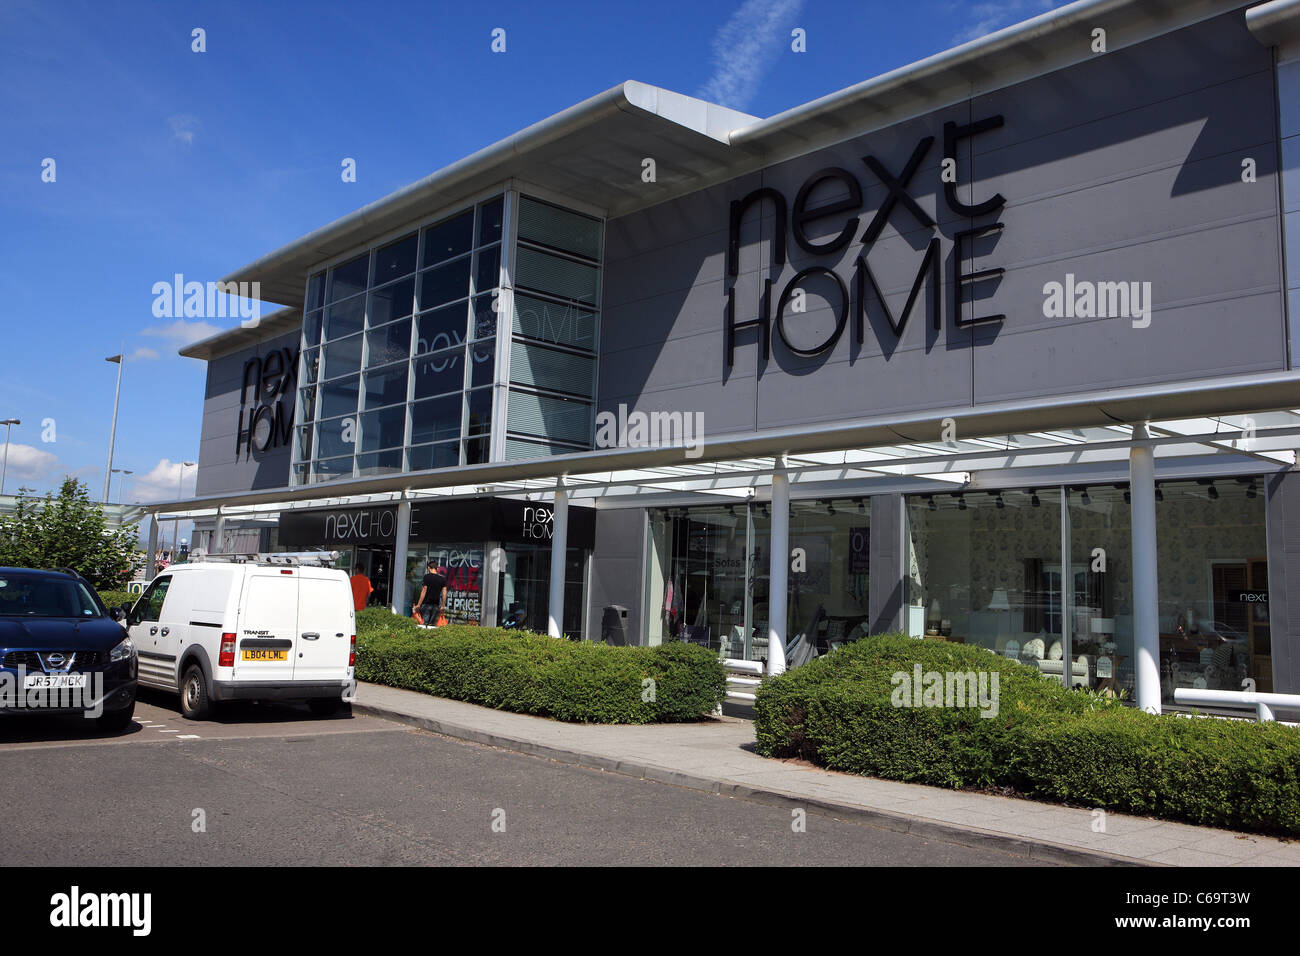 Next Home Store at Braehead Glasgow Stock Photo